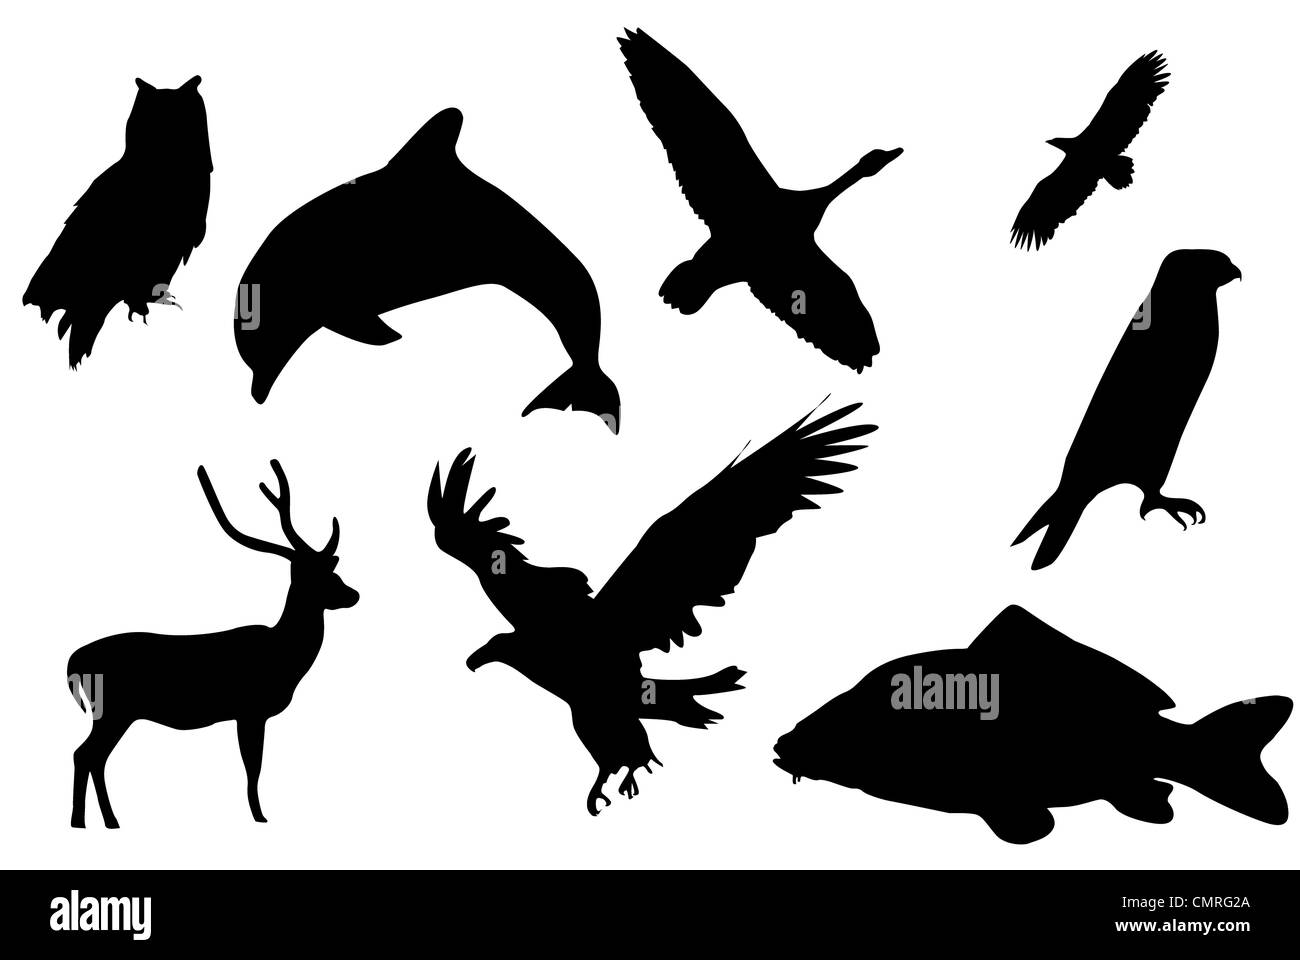 Eight black silhouettes of animals. Stock Photo